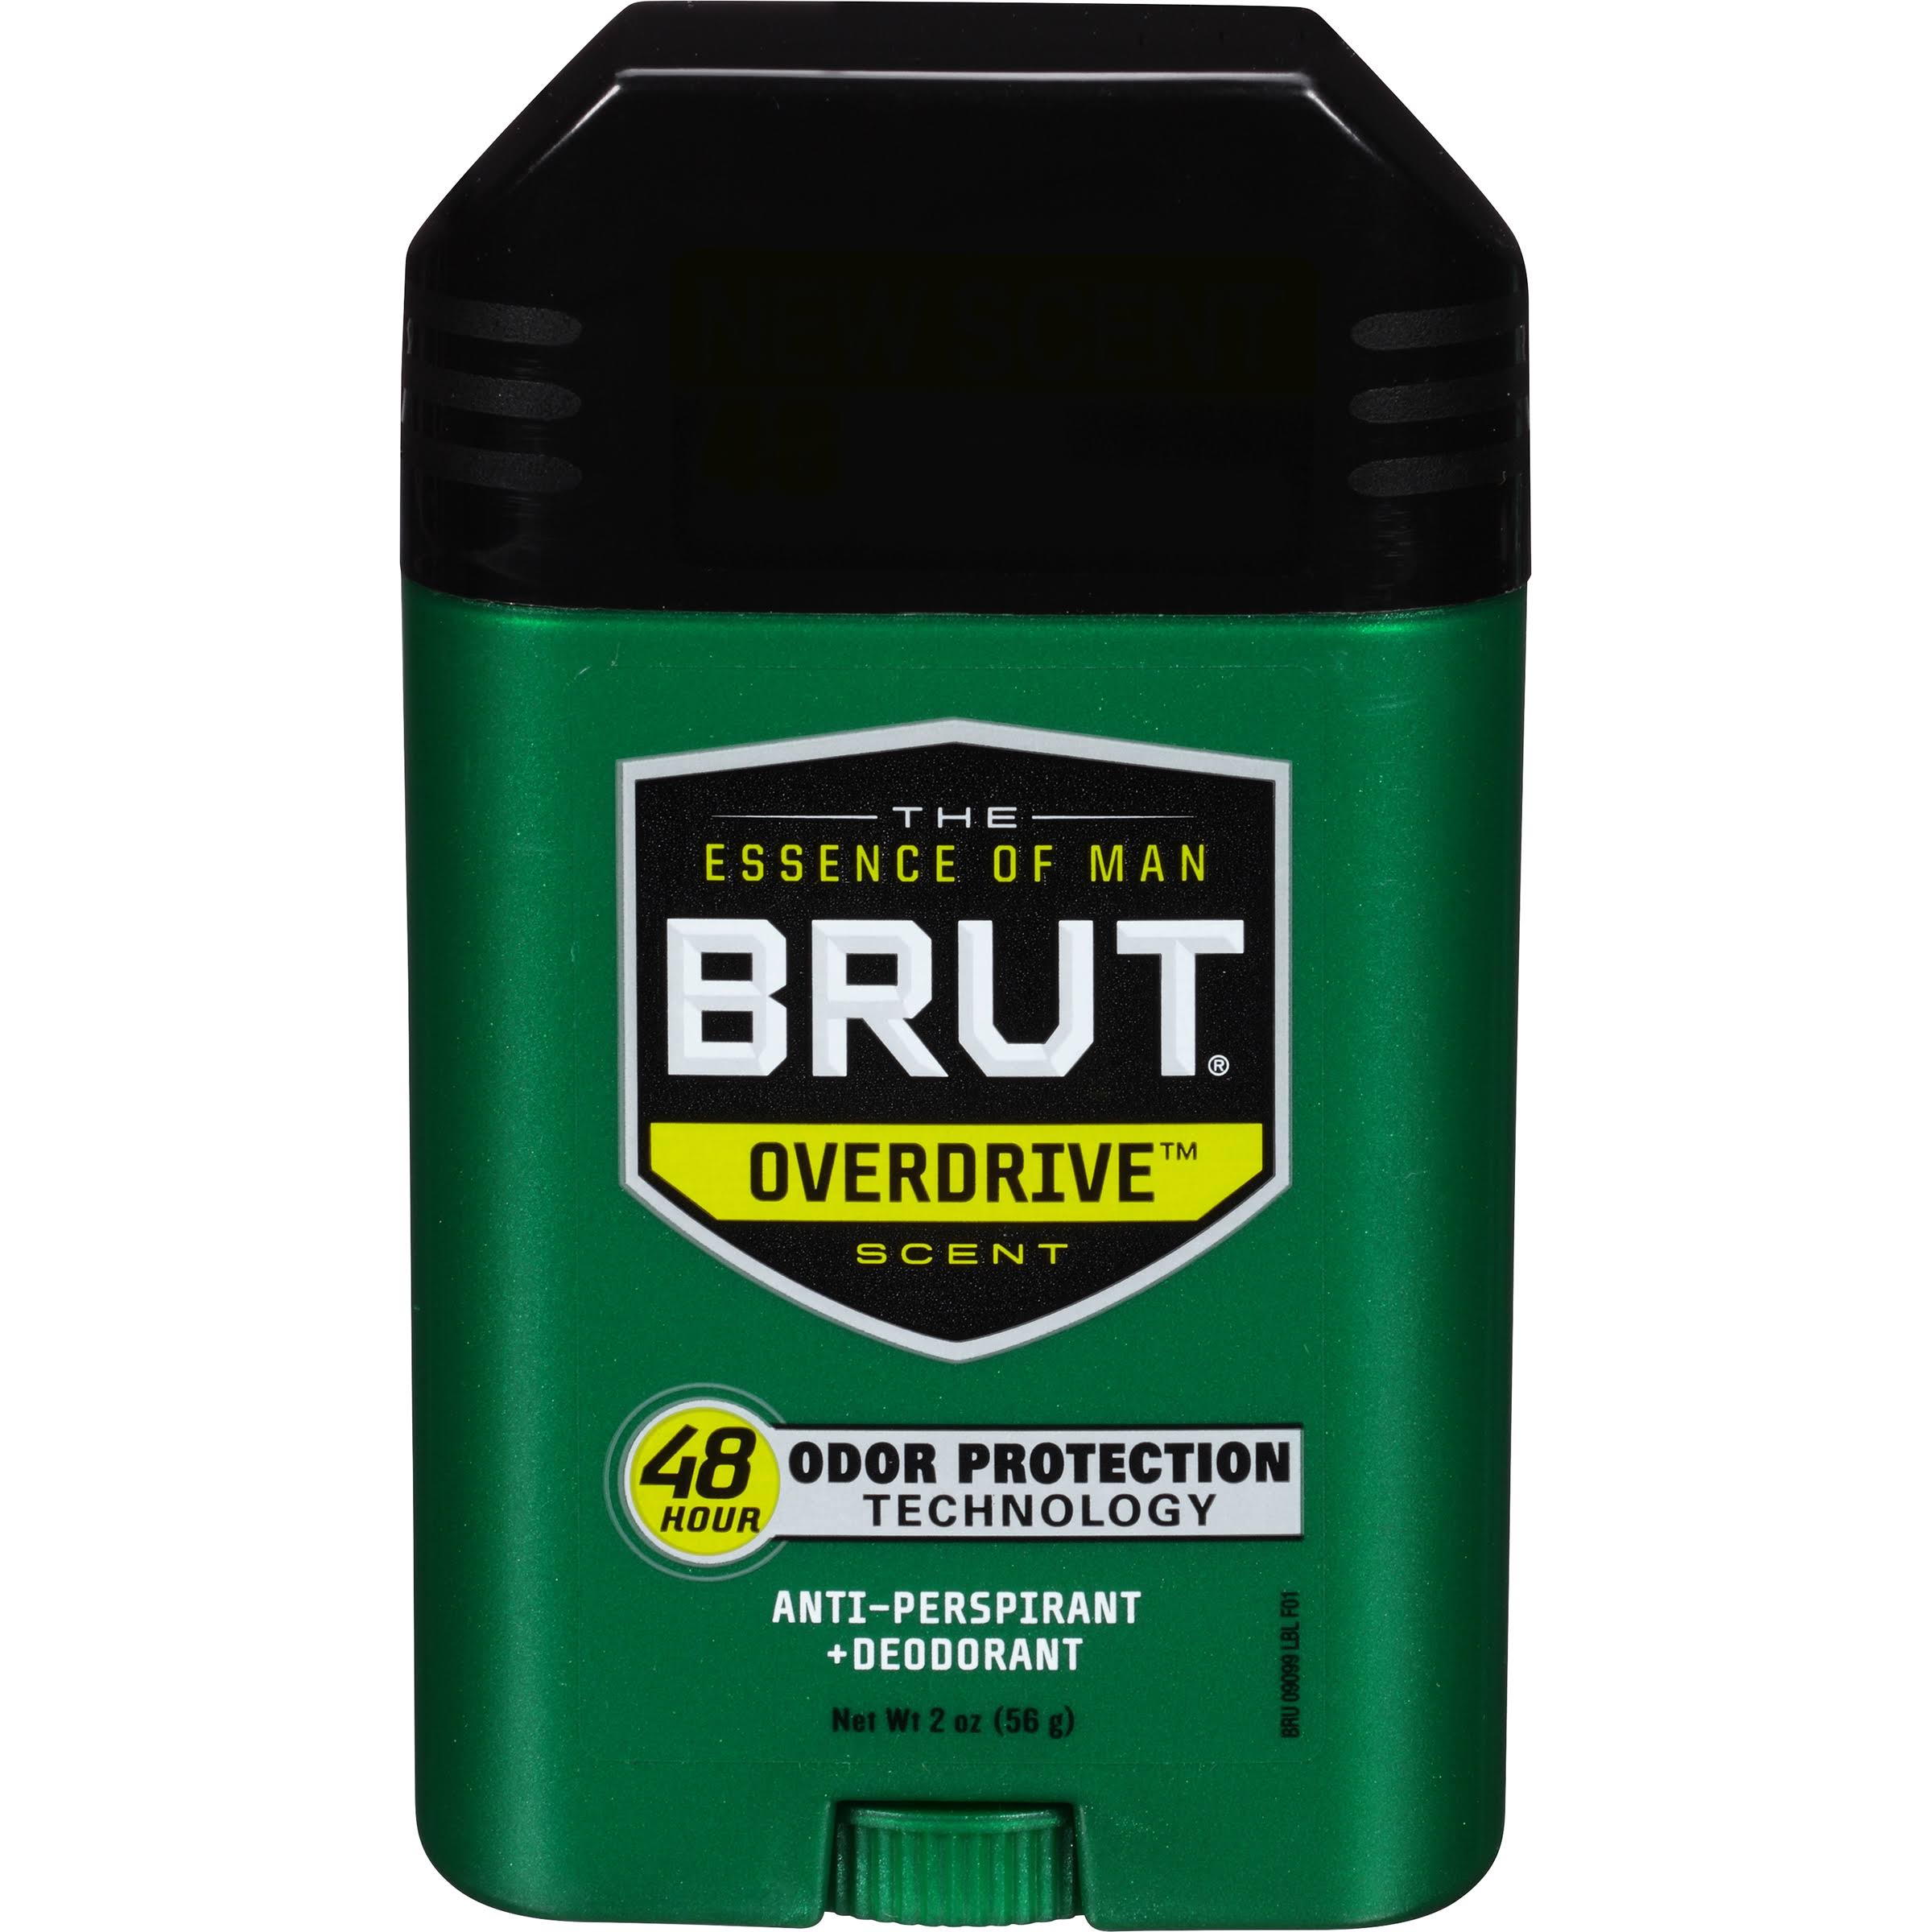 Brut Overdrive Scent 48 Hour Odor Protection Deodorant - 2oz, 6pk